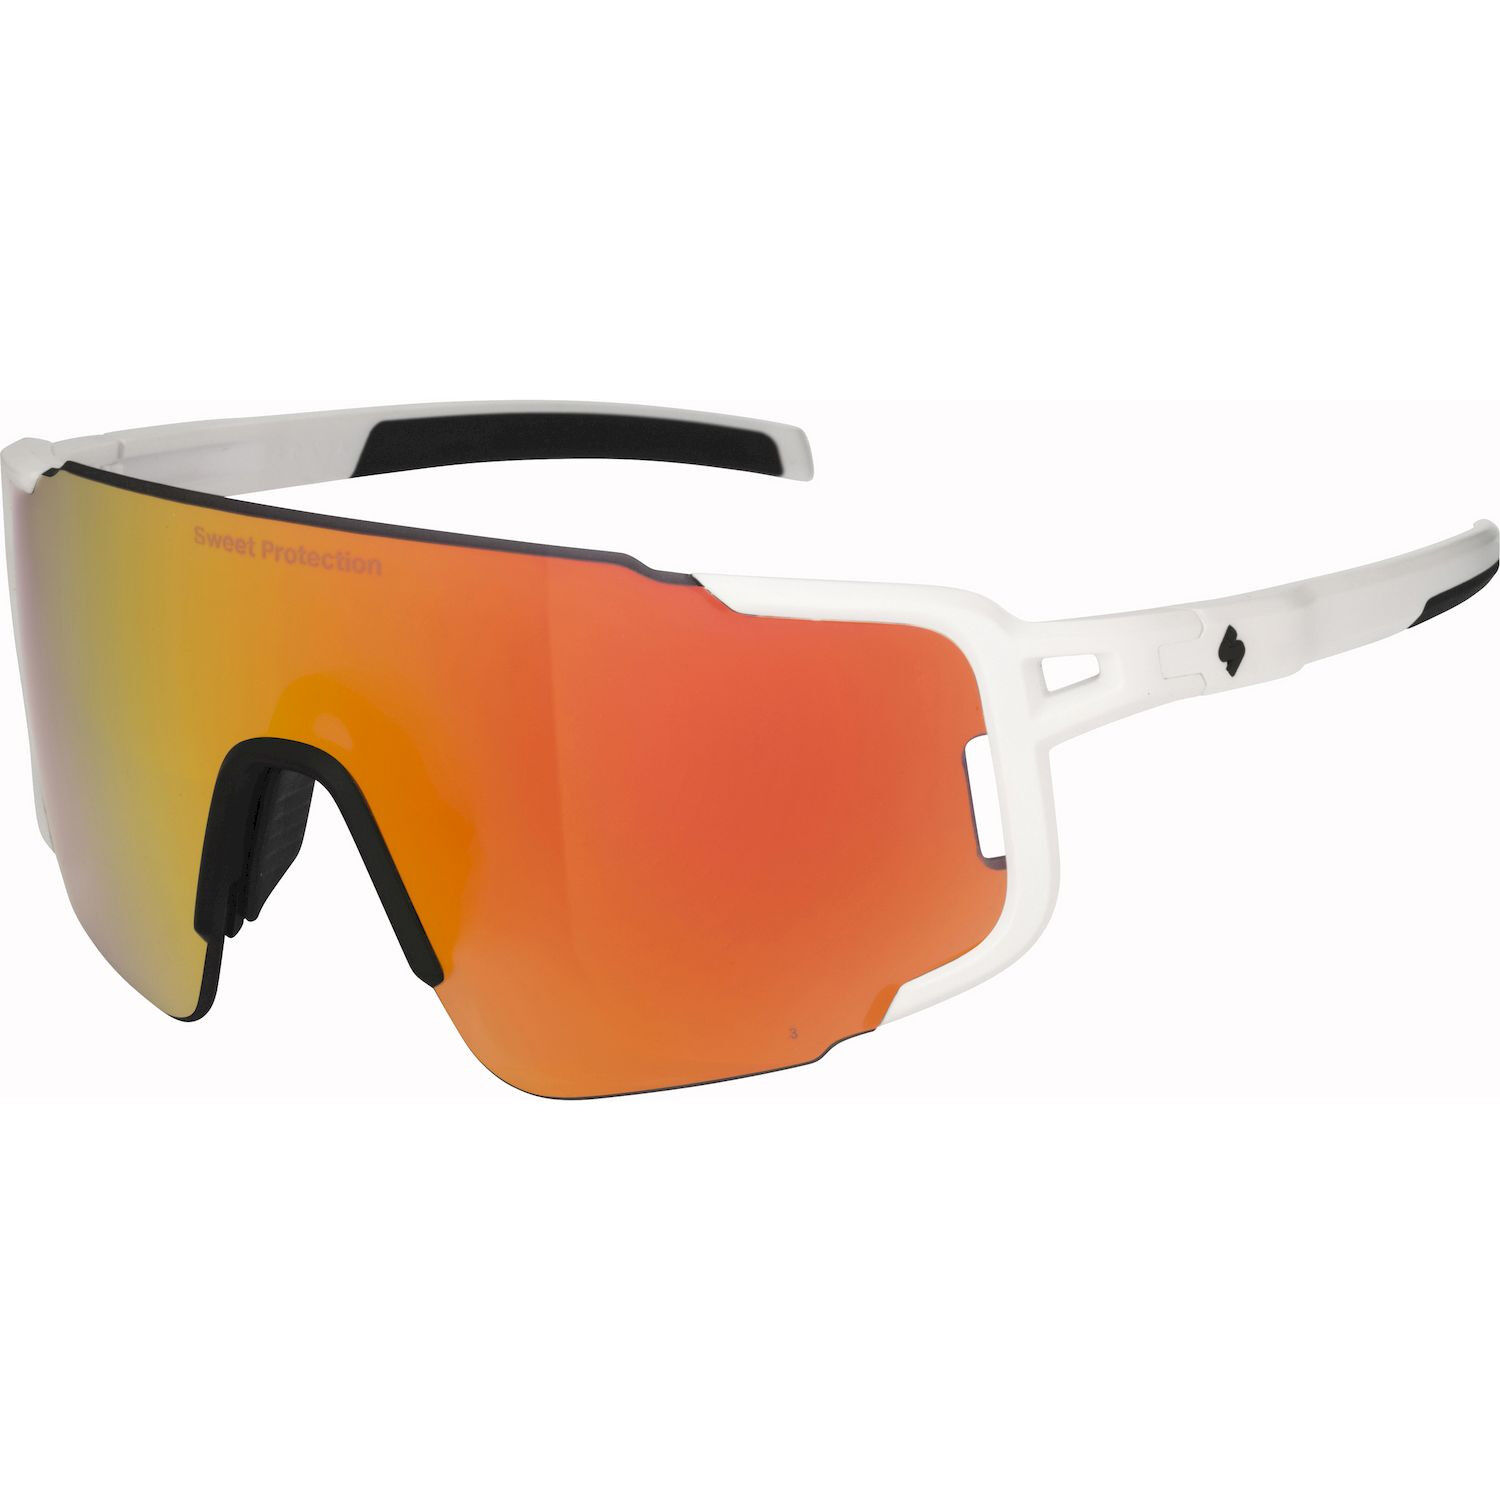 Sweet Protection Ronin Max RIG Reflect - Cycling sunglasses - Men's